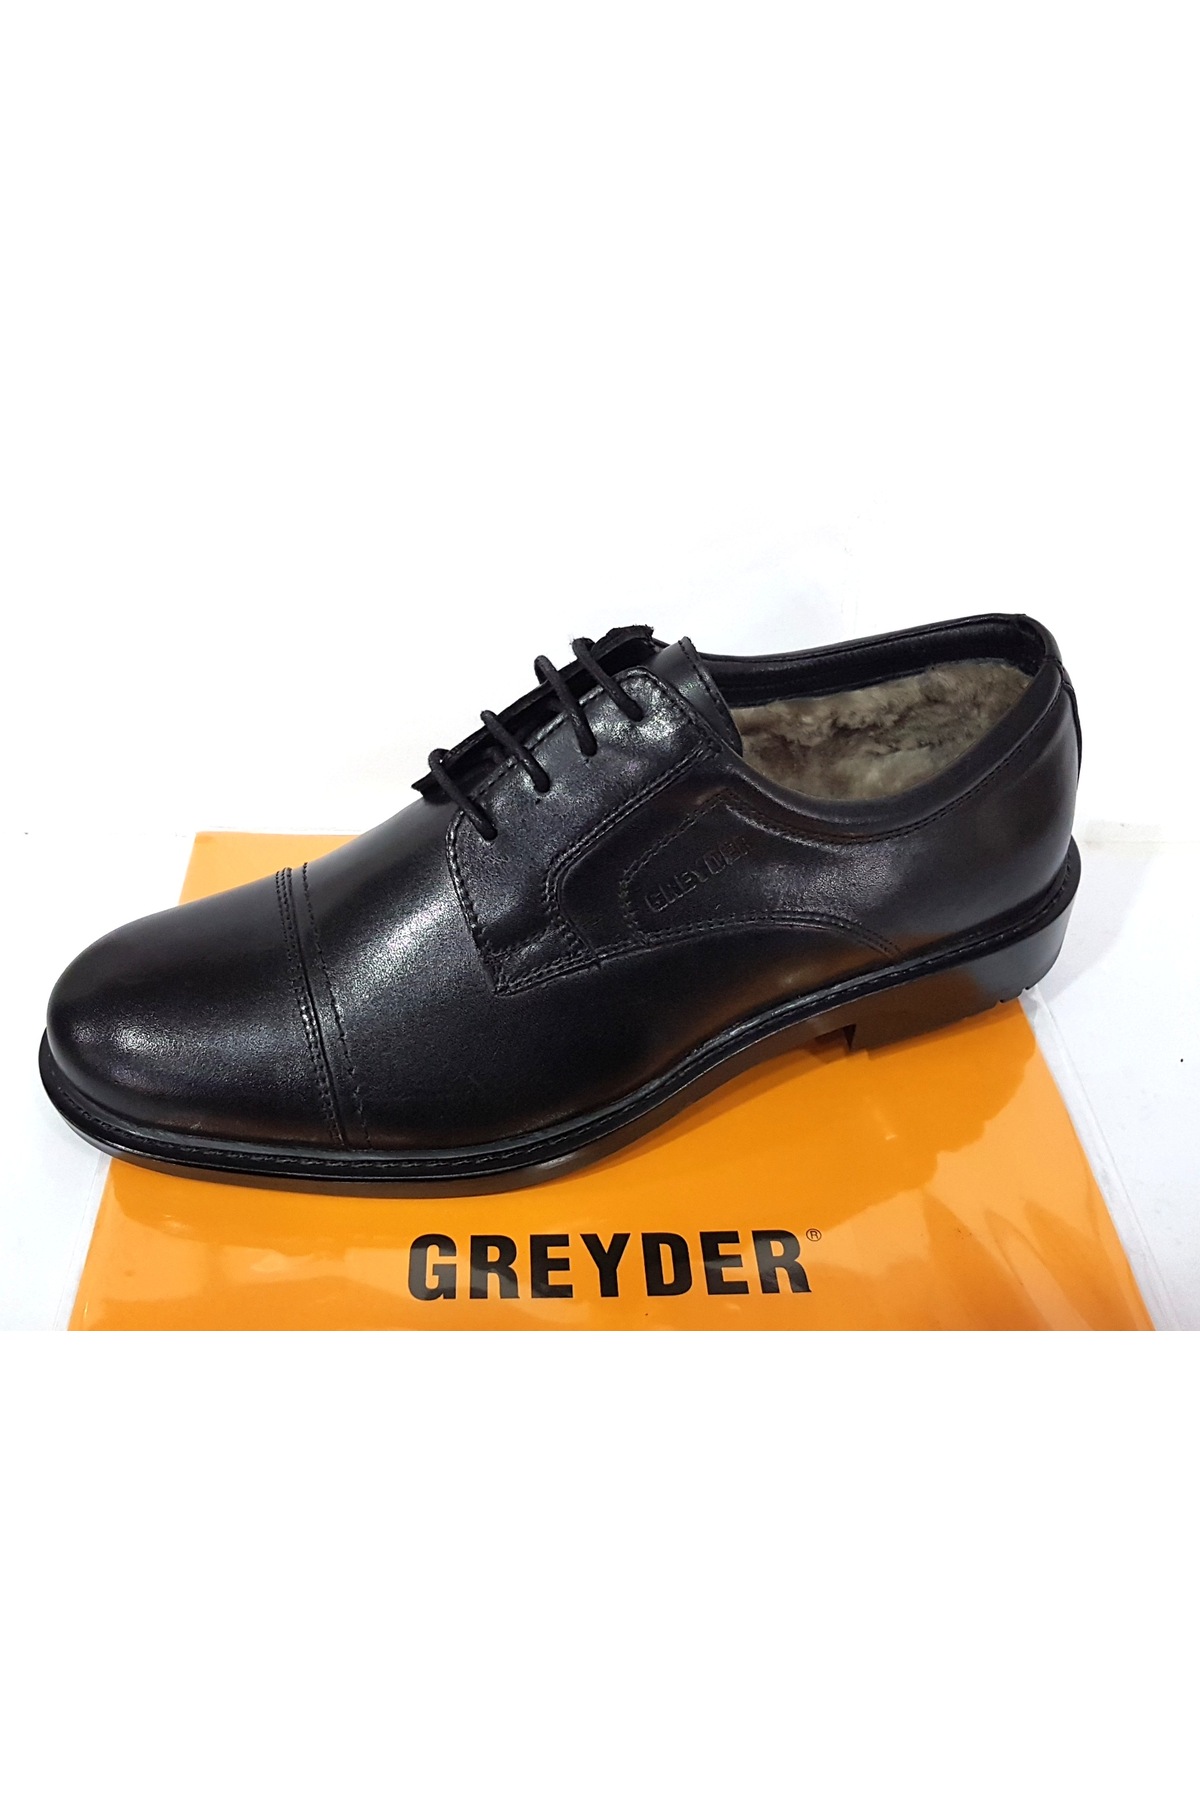 Greyder Ayakkabı